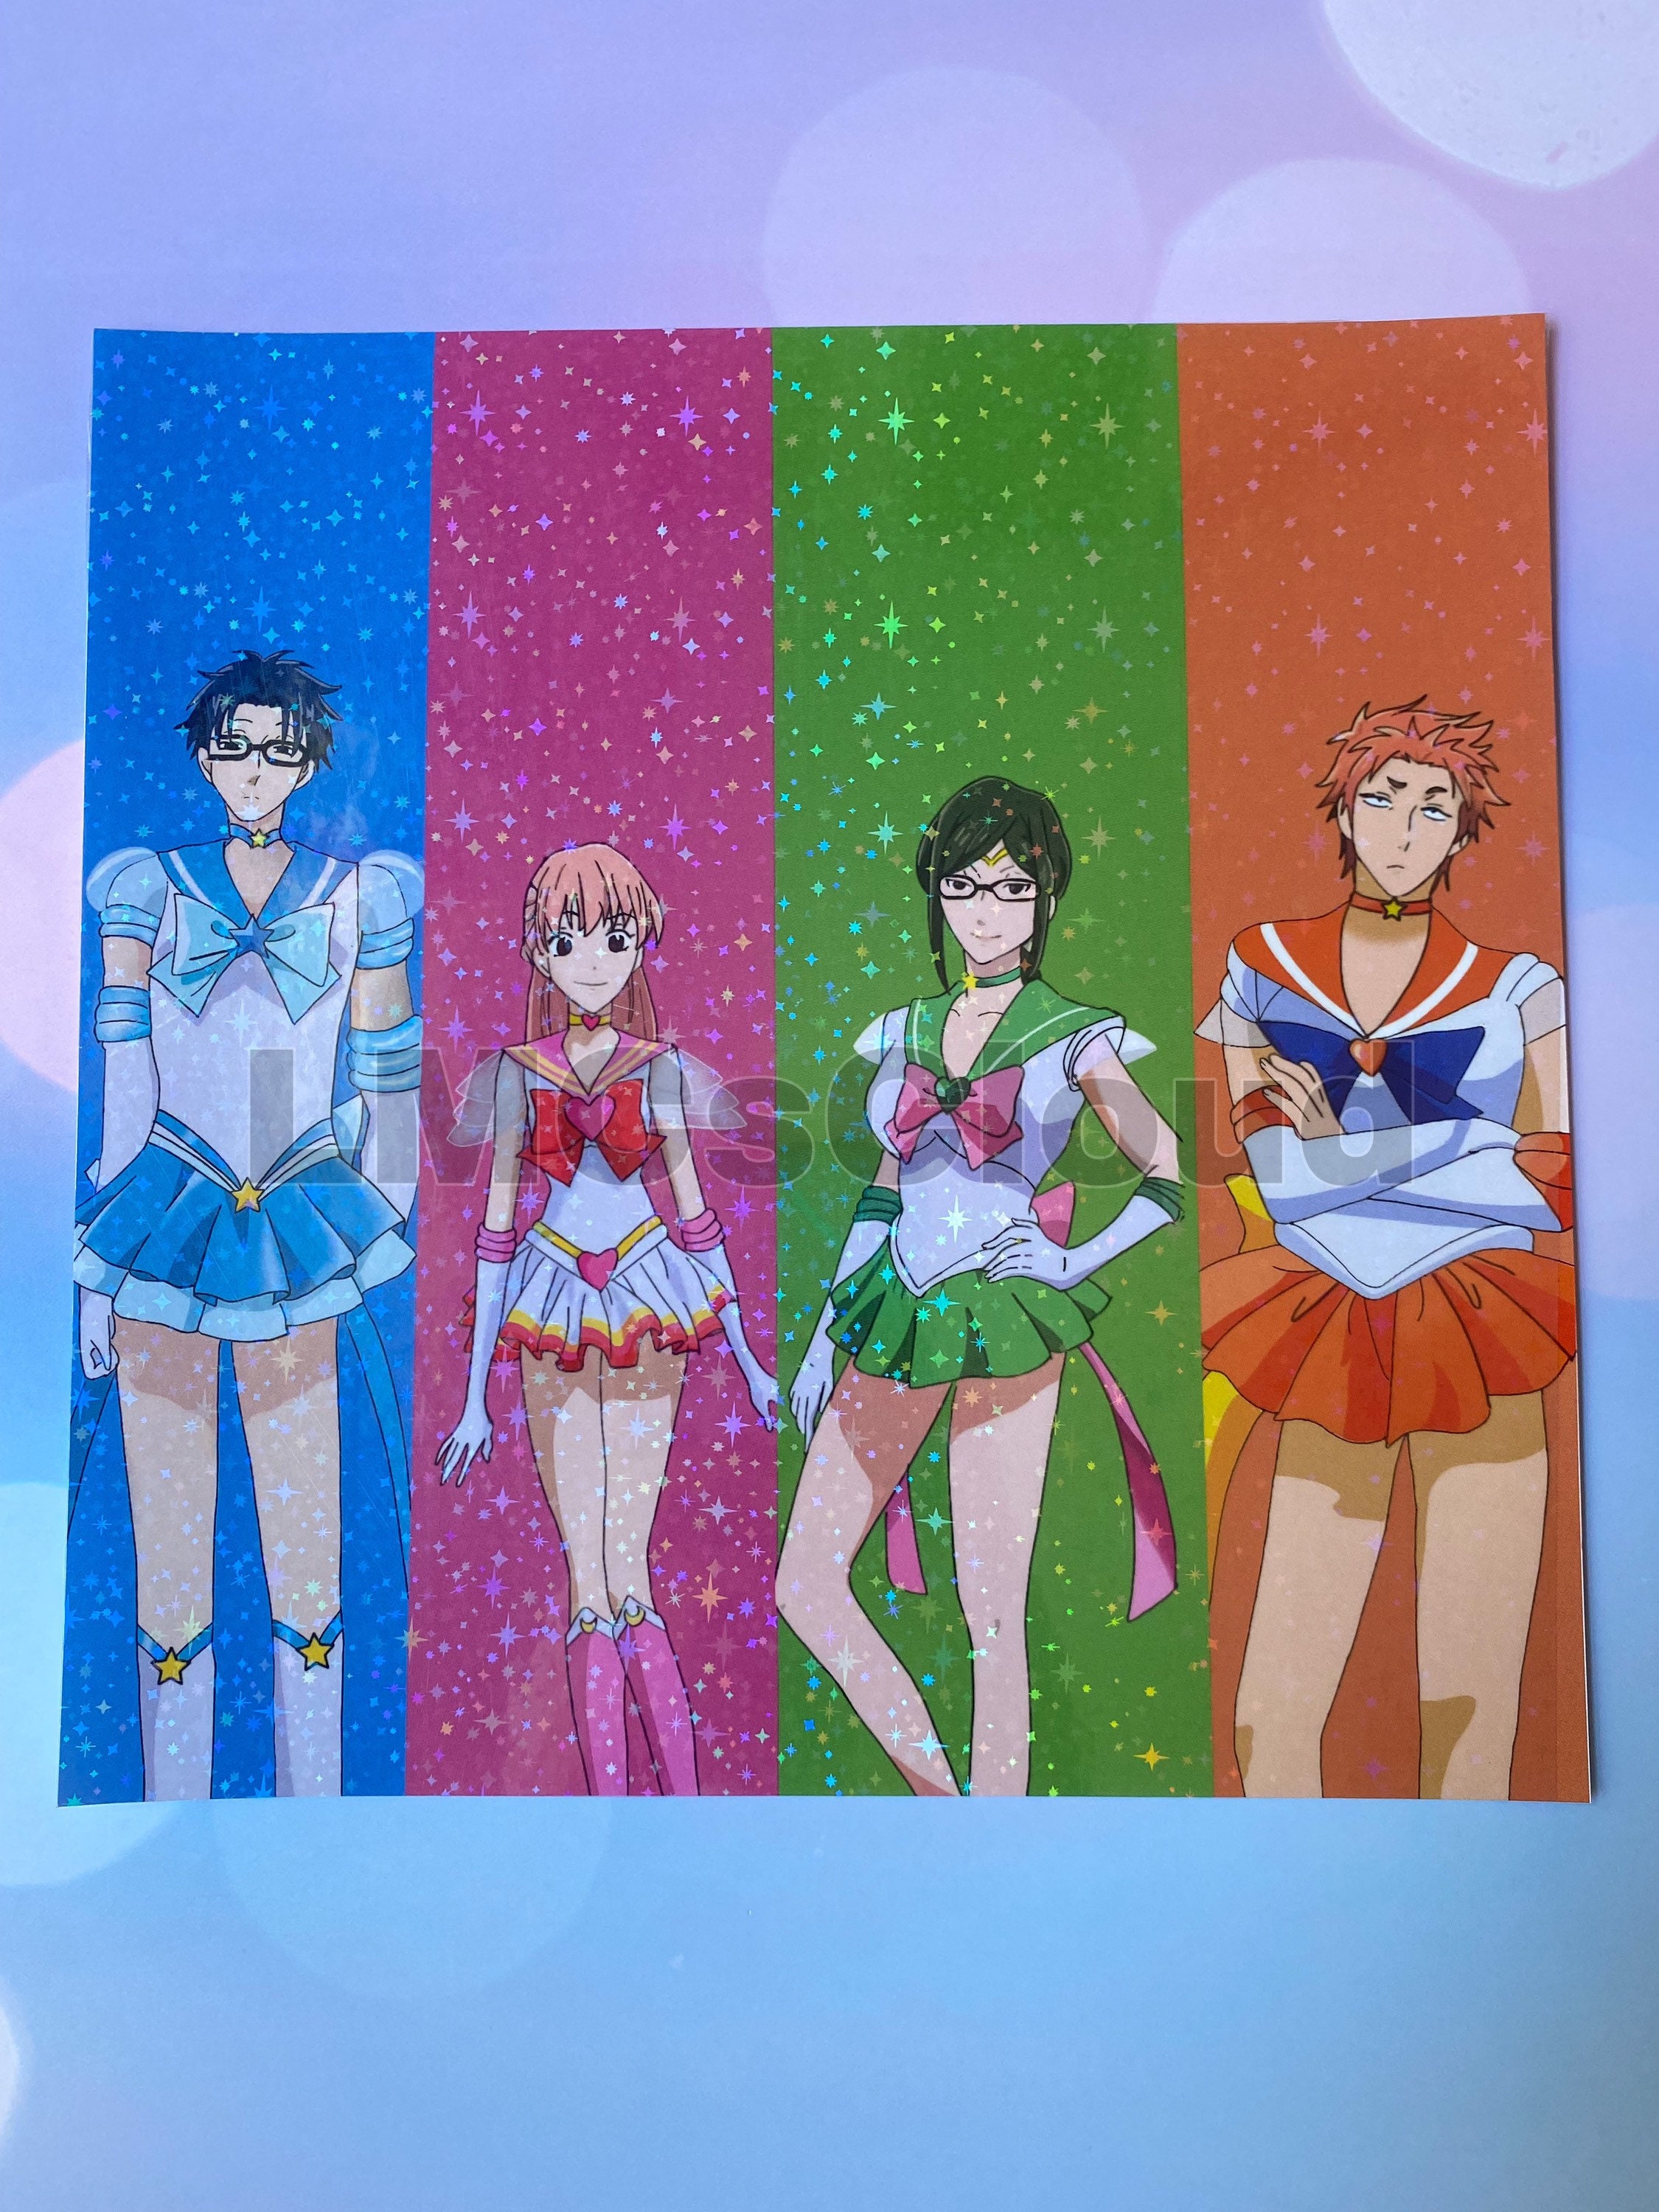 SUPERIOR POSTER - Kaguya Sama Love is War - Anime Manga Art Wall Print - TV  Show Japanese - 16x20 Inches